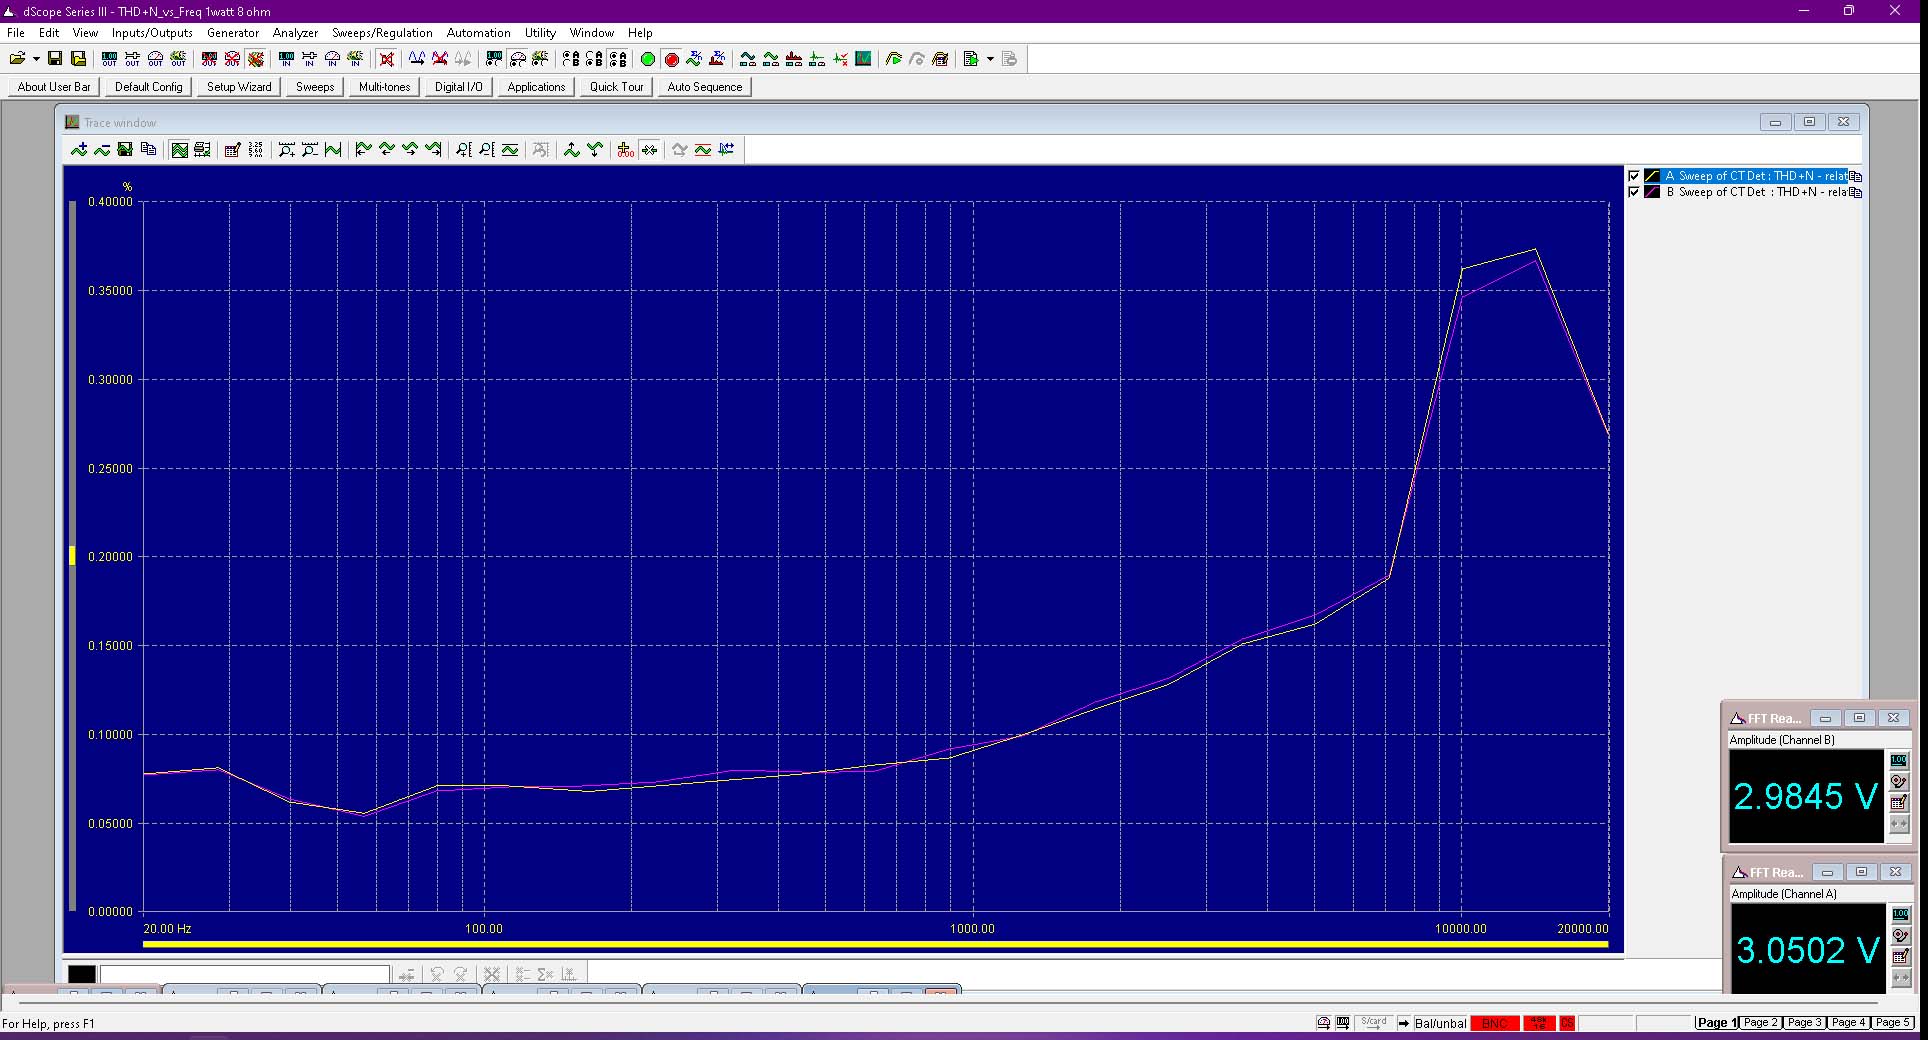 Volumio Integro - 1 watt THD vs Freq